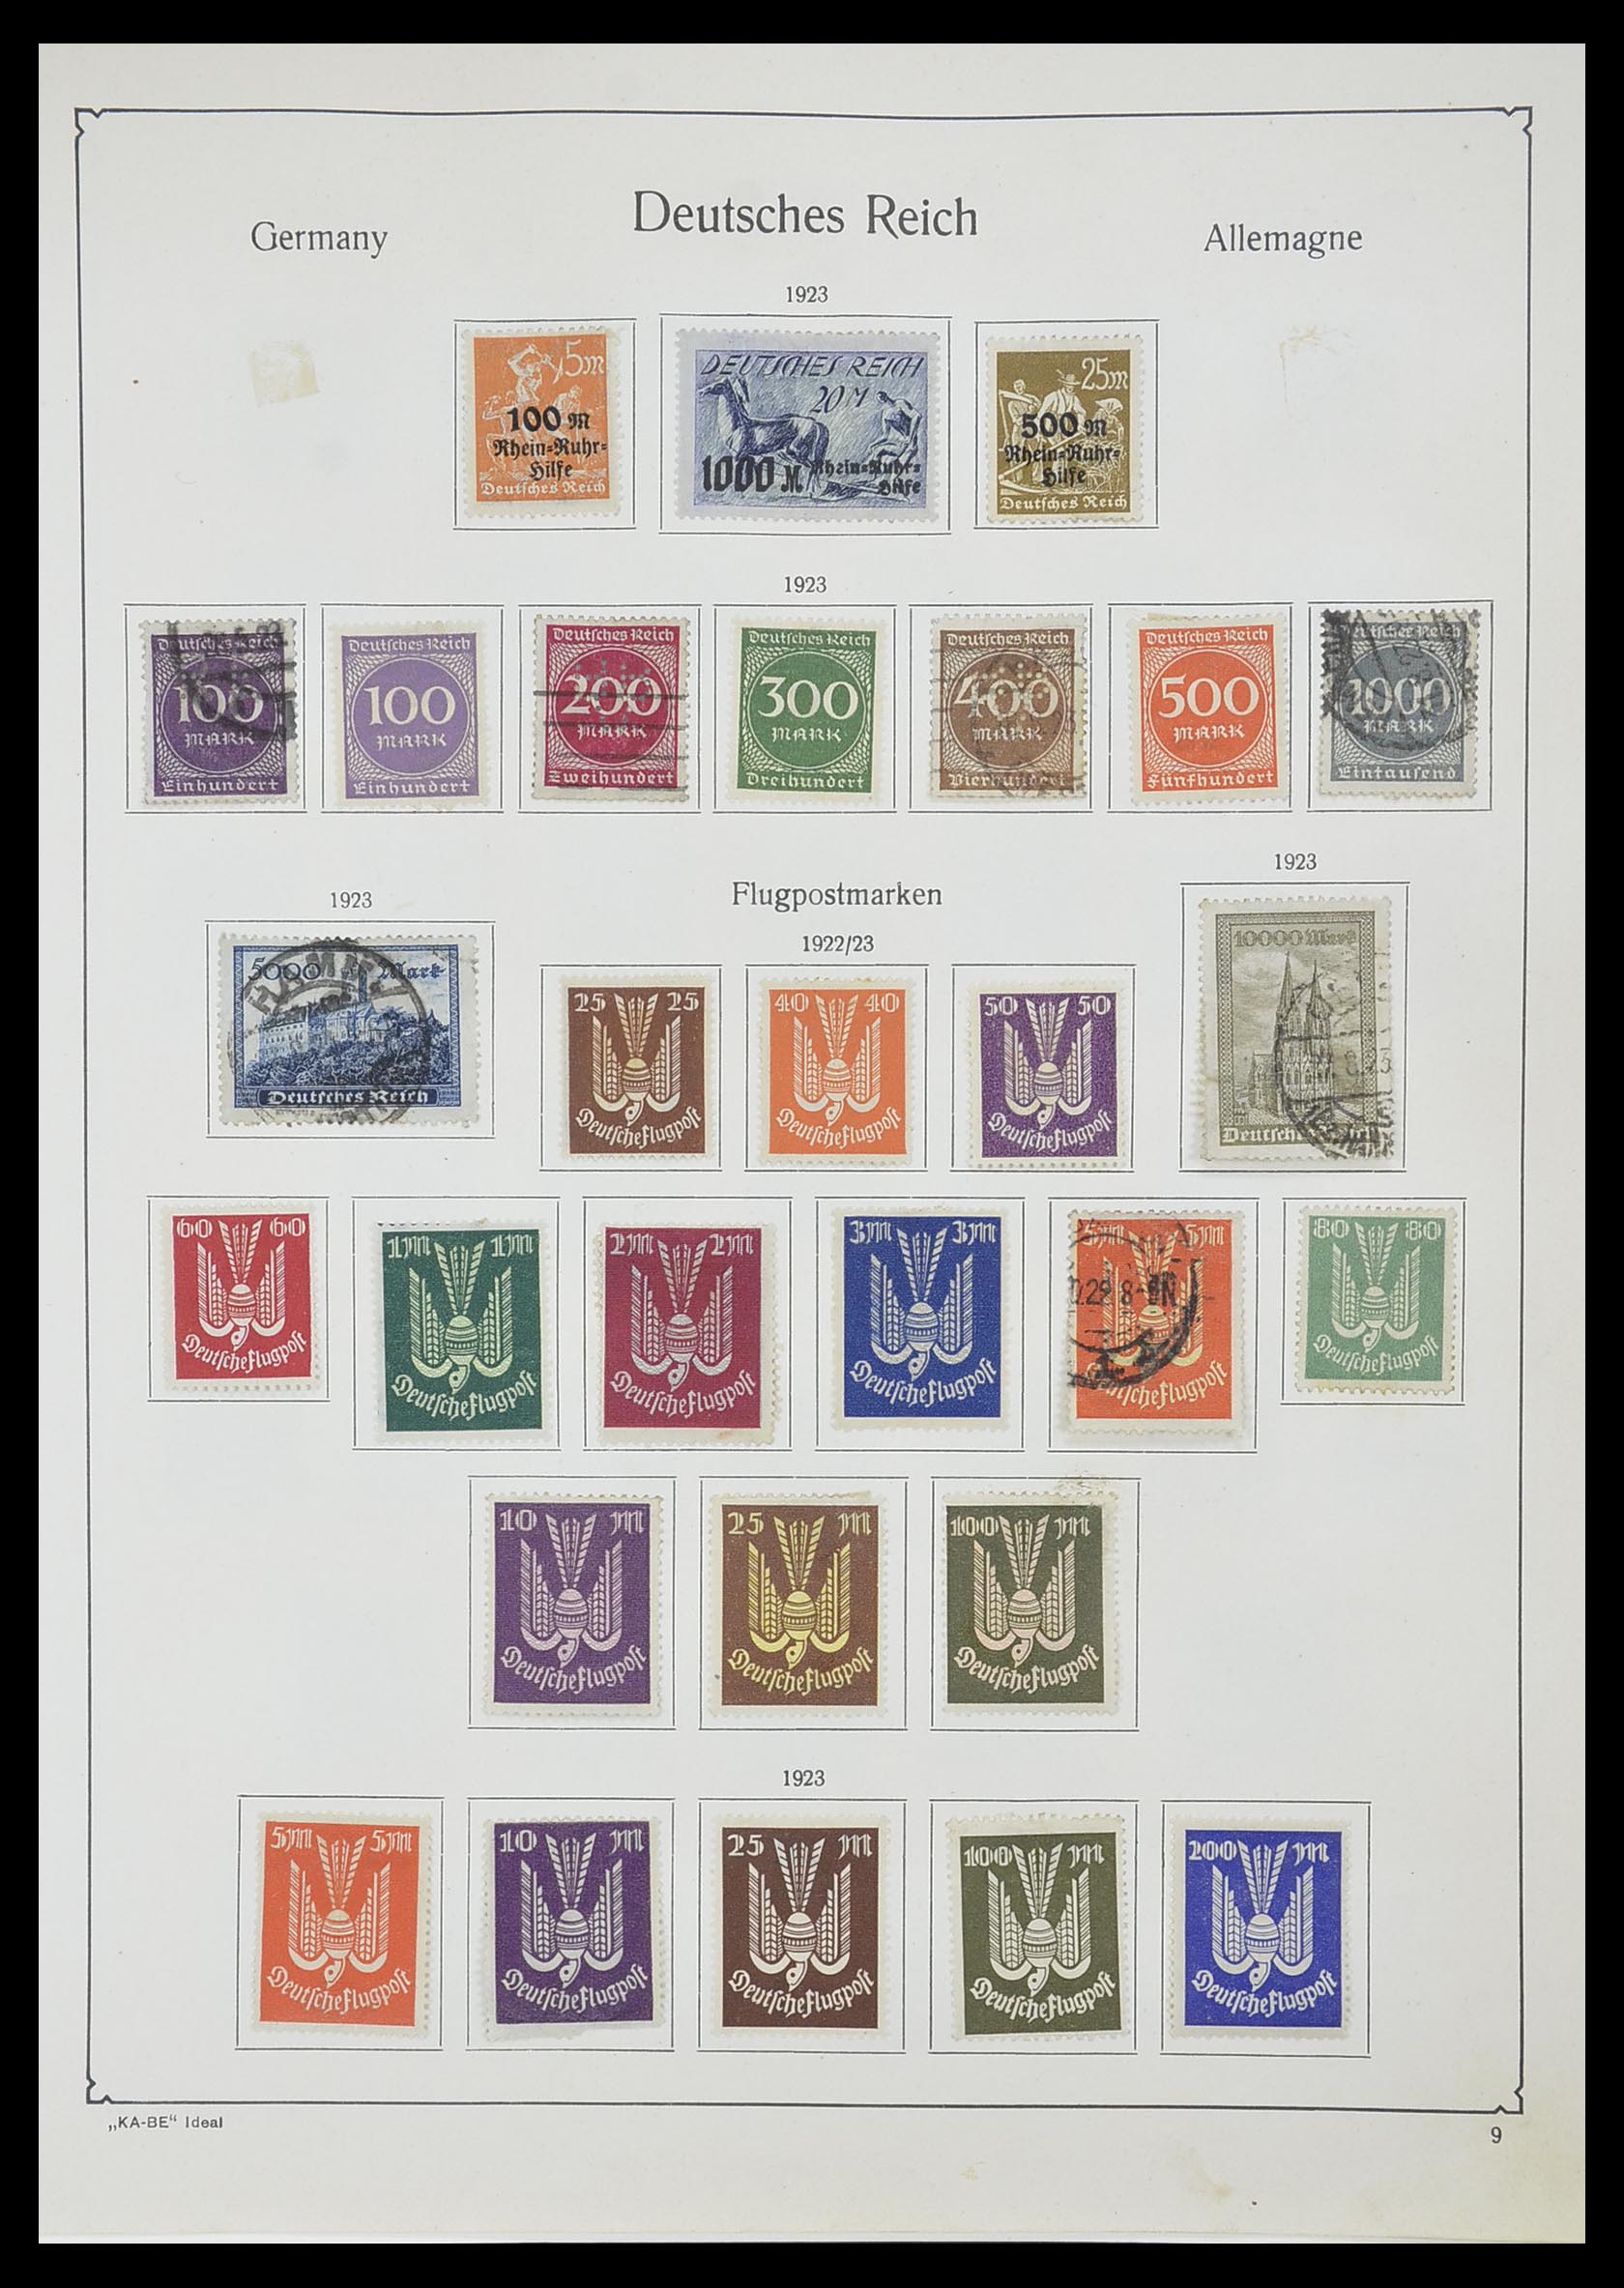 33359 012 - Stamp collection 33359 German Reich 1872-1945.